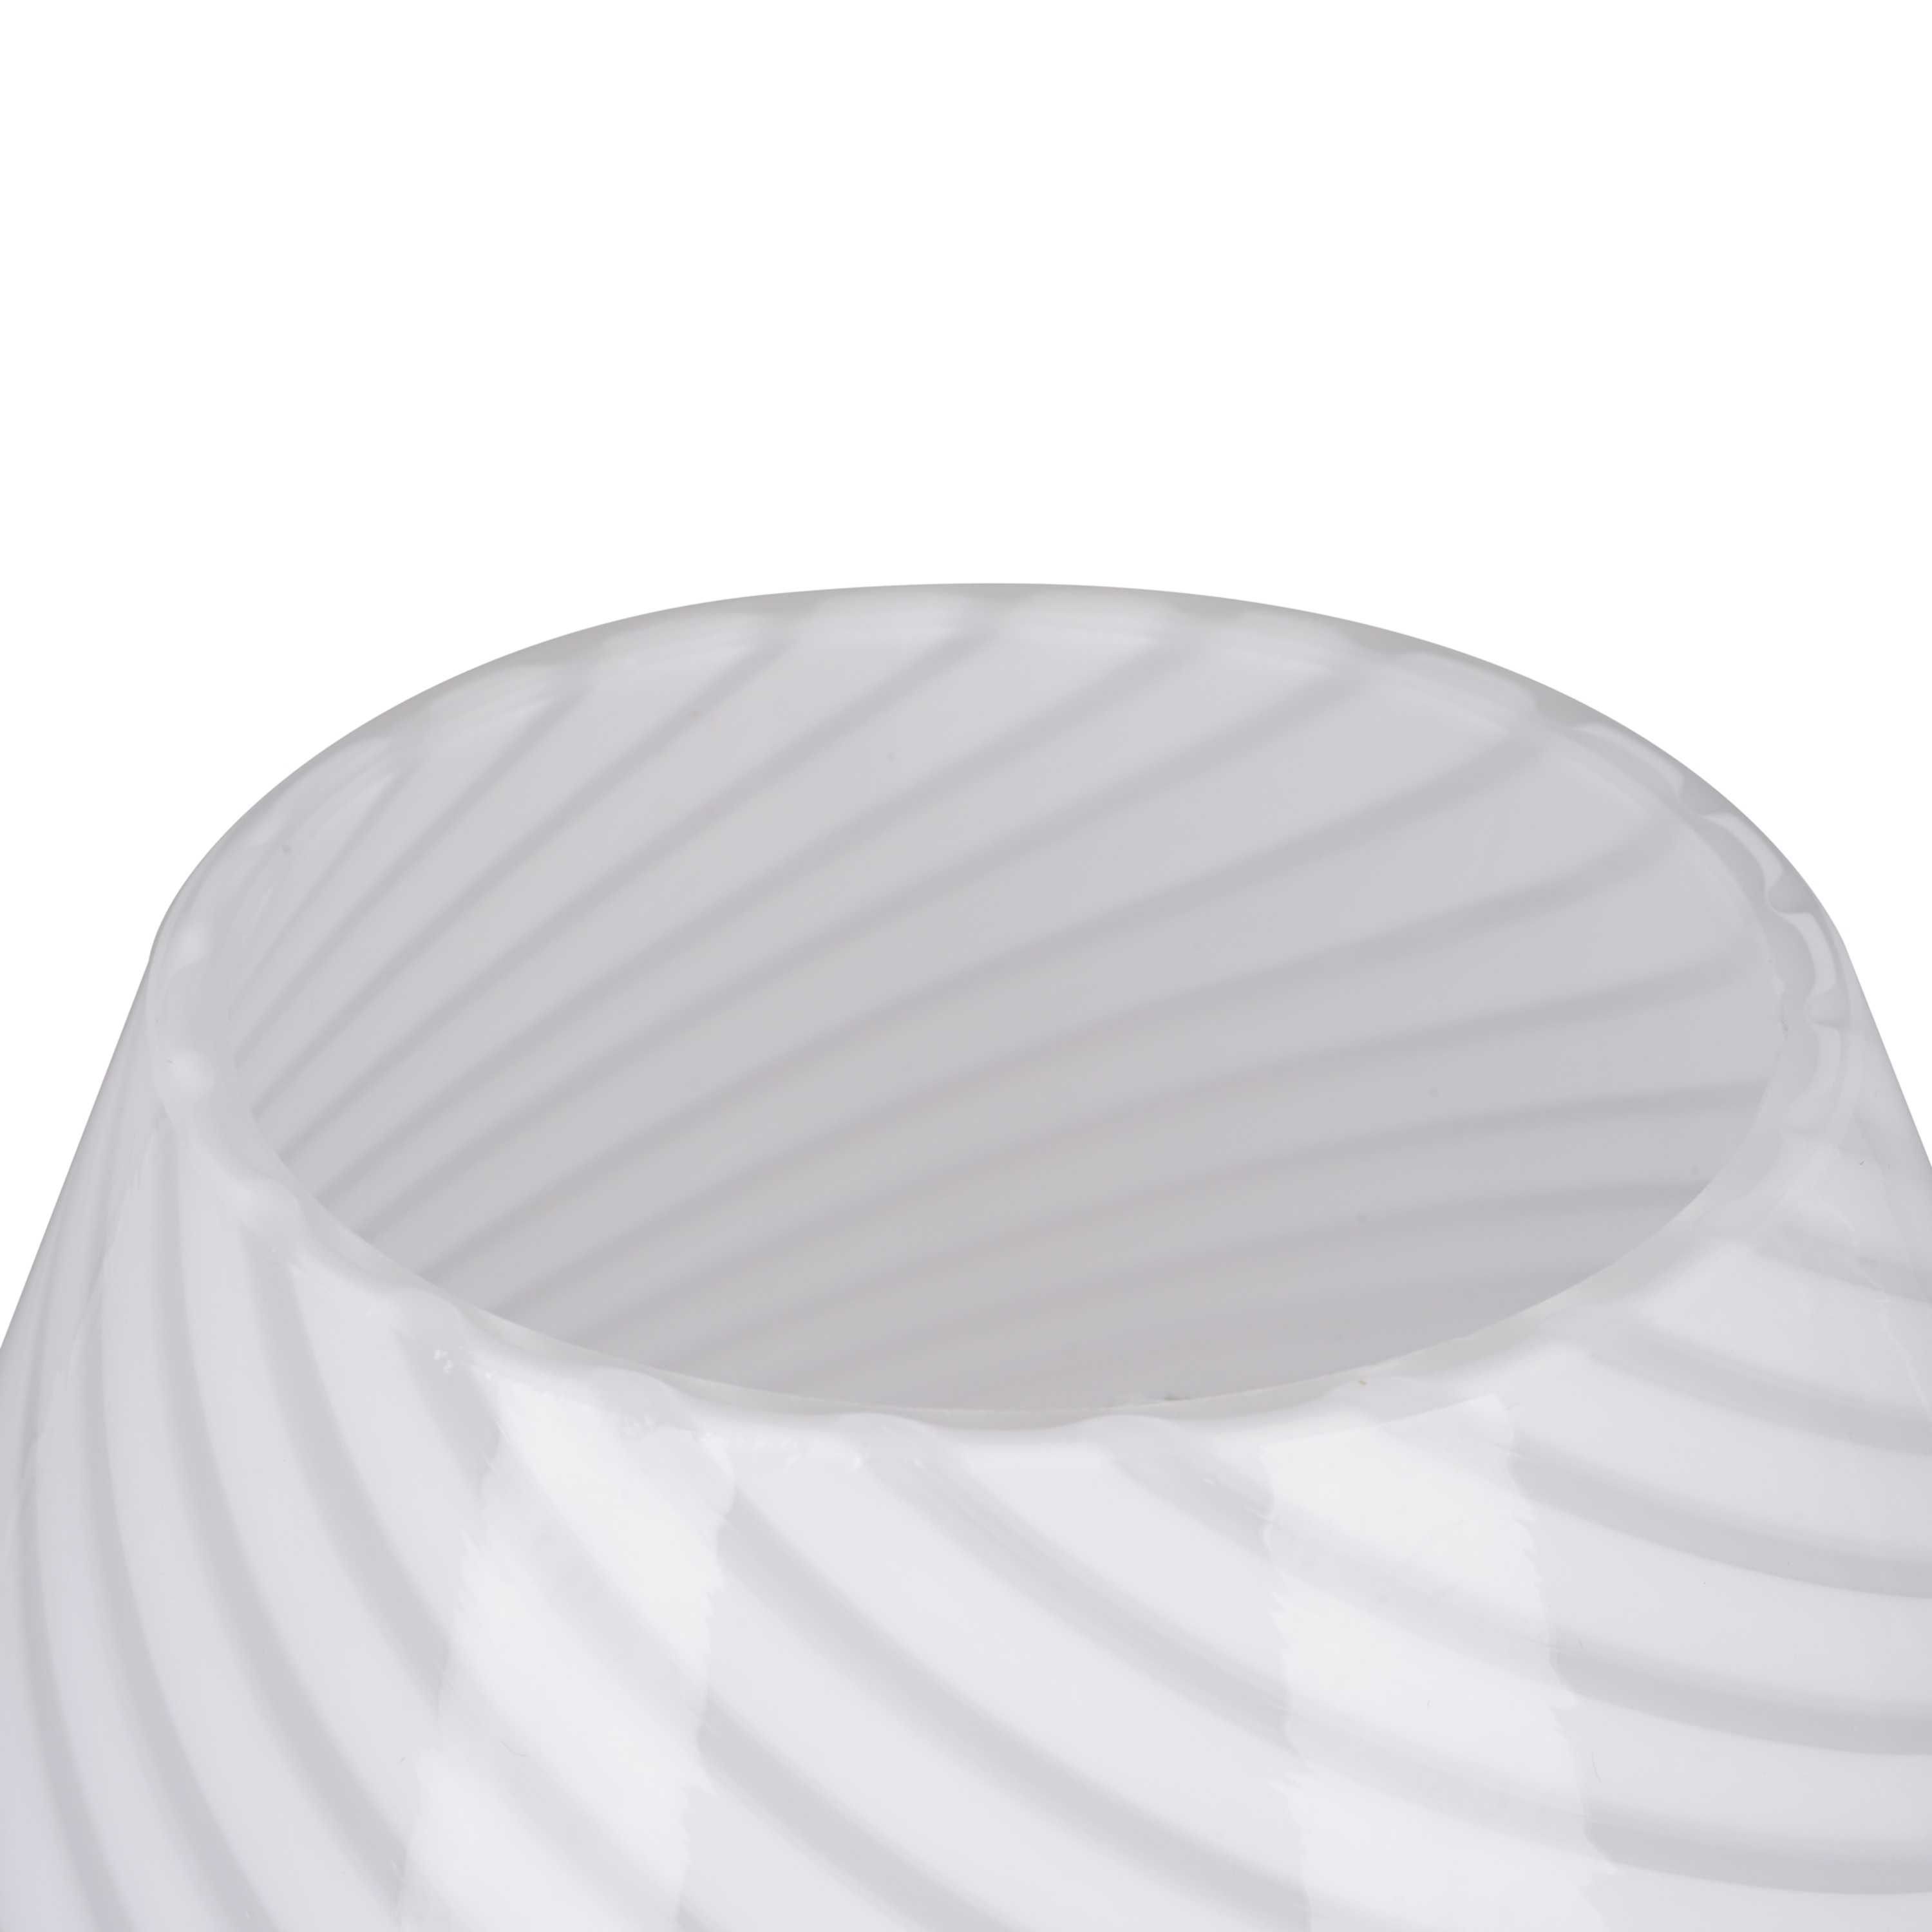 8" Glass Mushroom Lamp, White Stripe, Glossy Finish - image 7 of 12